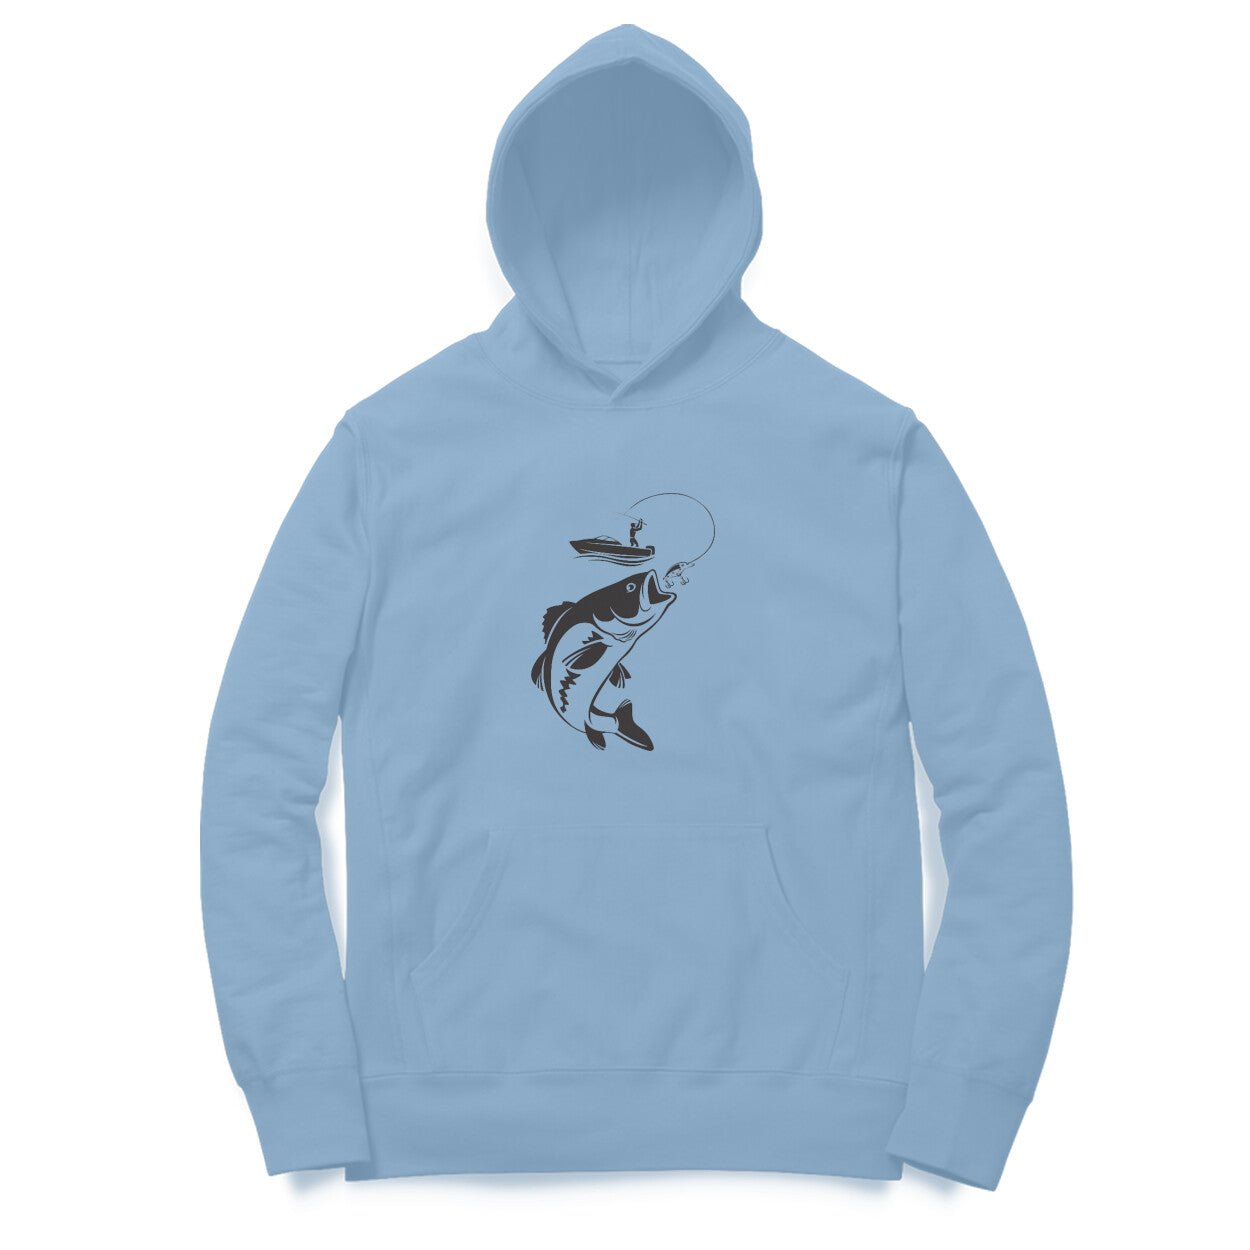 Mens / Woman's Angling टोपी वाला स्वेटर | सामने मछली + पीछेfishermanshub.com लोगो| Hoodie